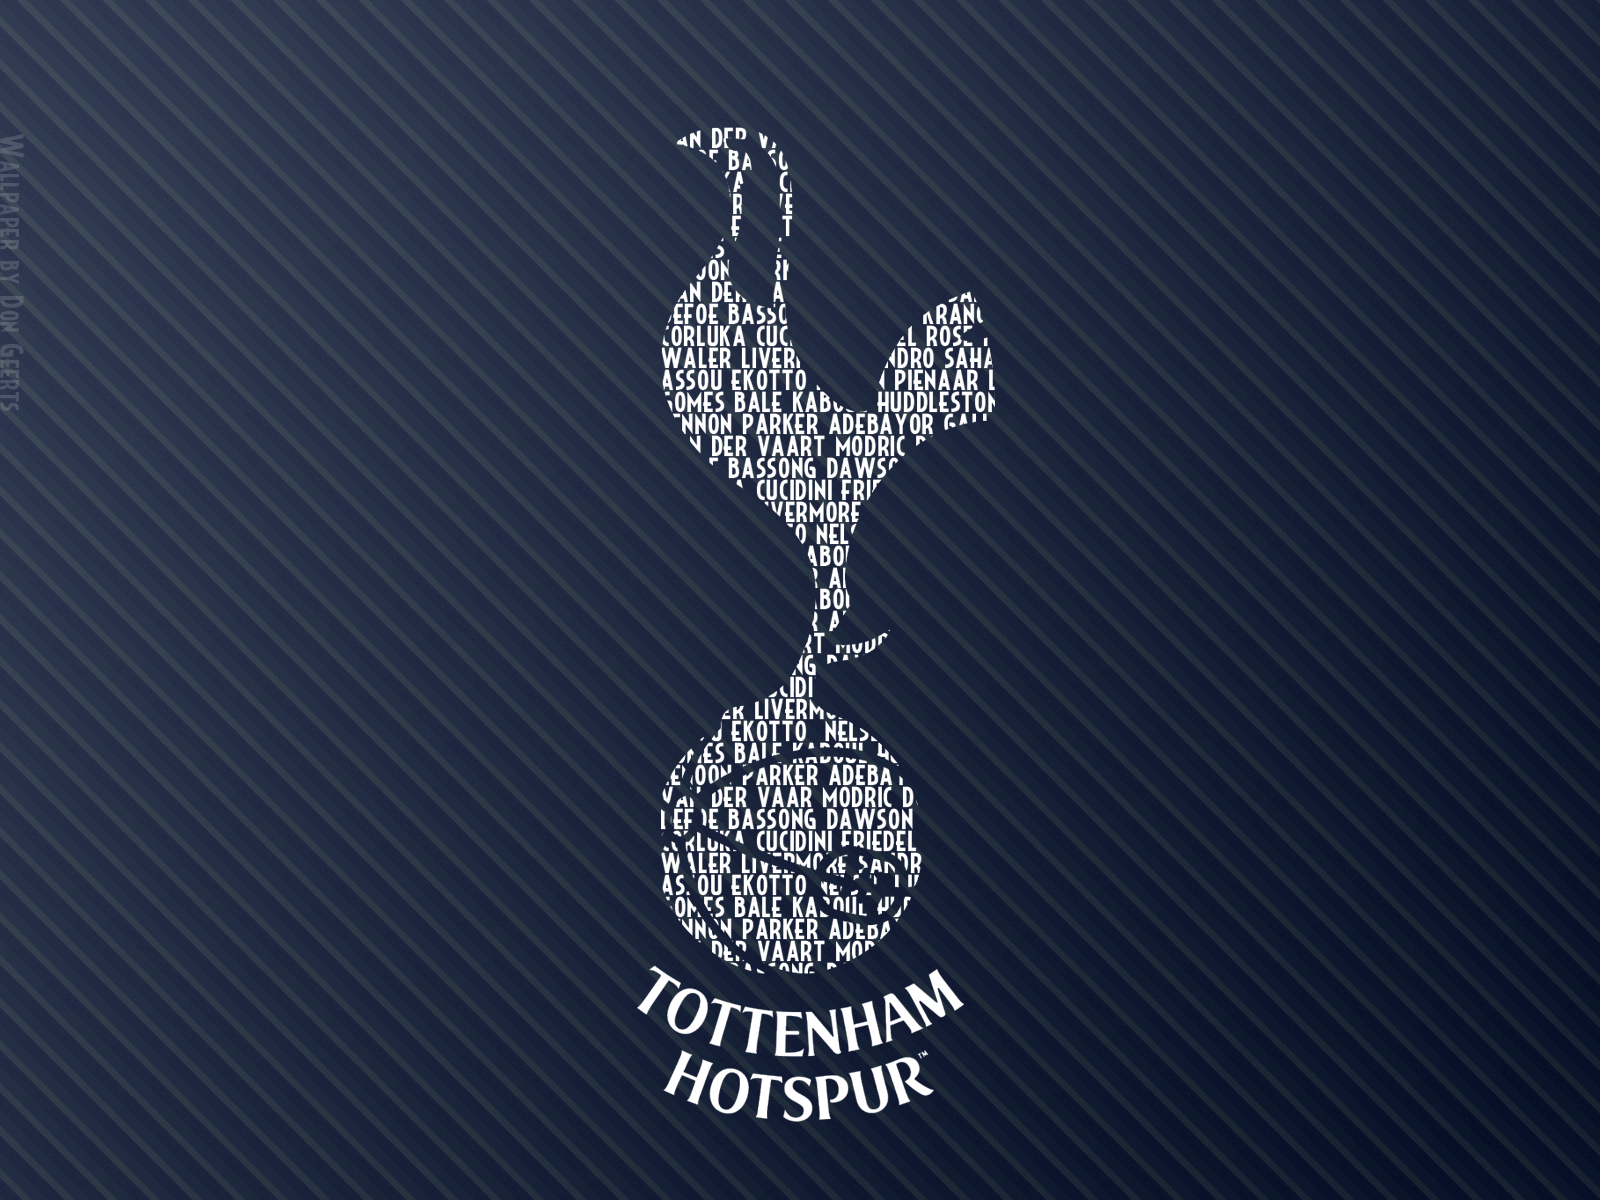 Football Clubs Tottenham Hotspur Wallpaper Id